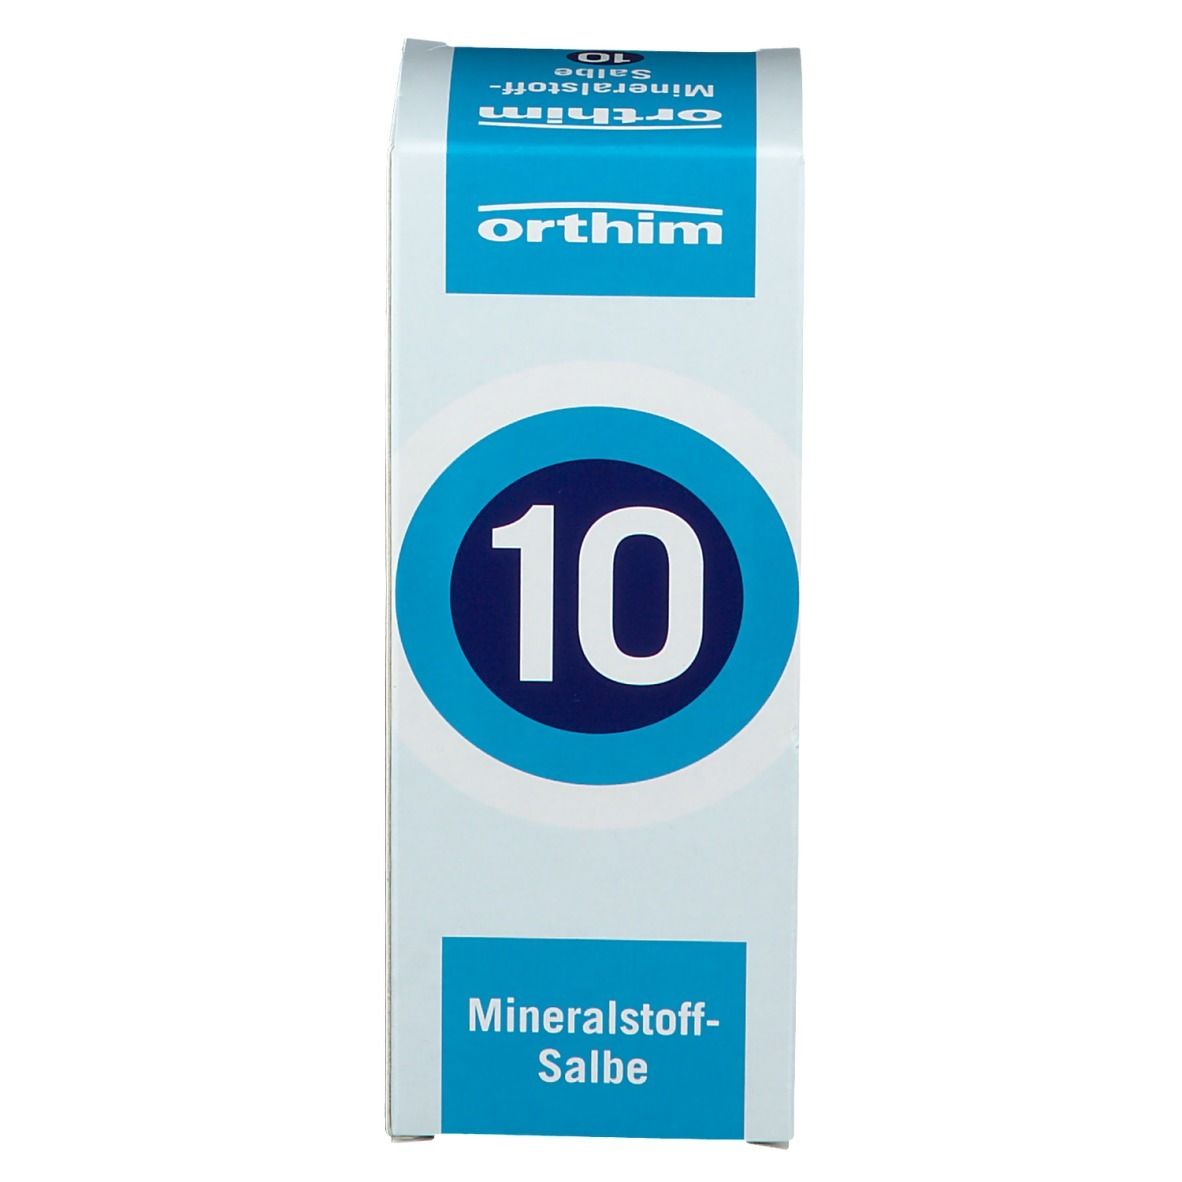 Mineralstoff-Salbe Nr. 10